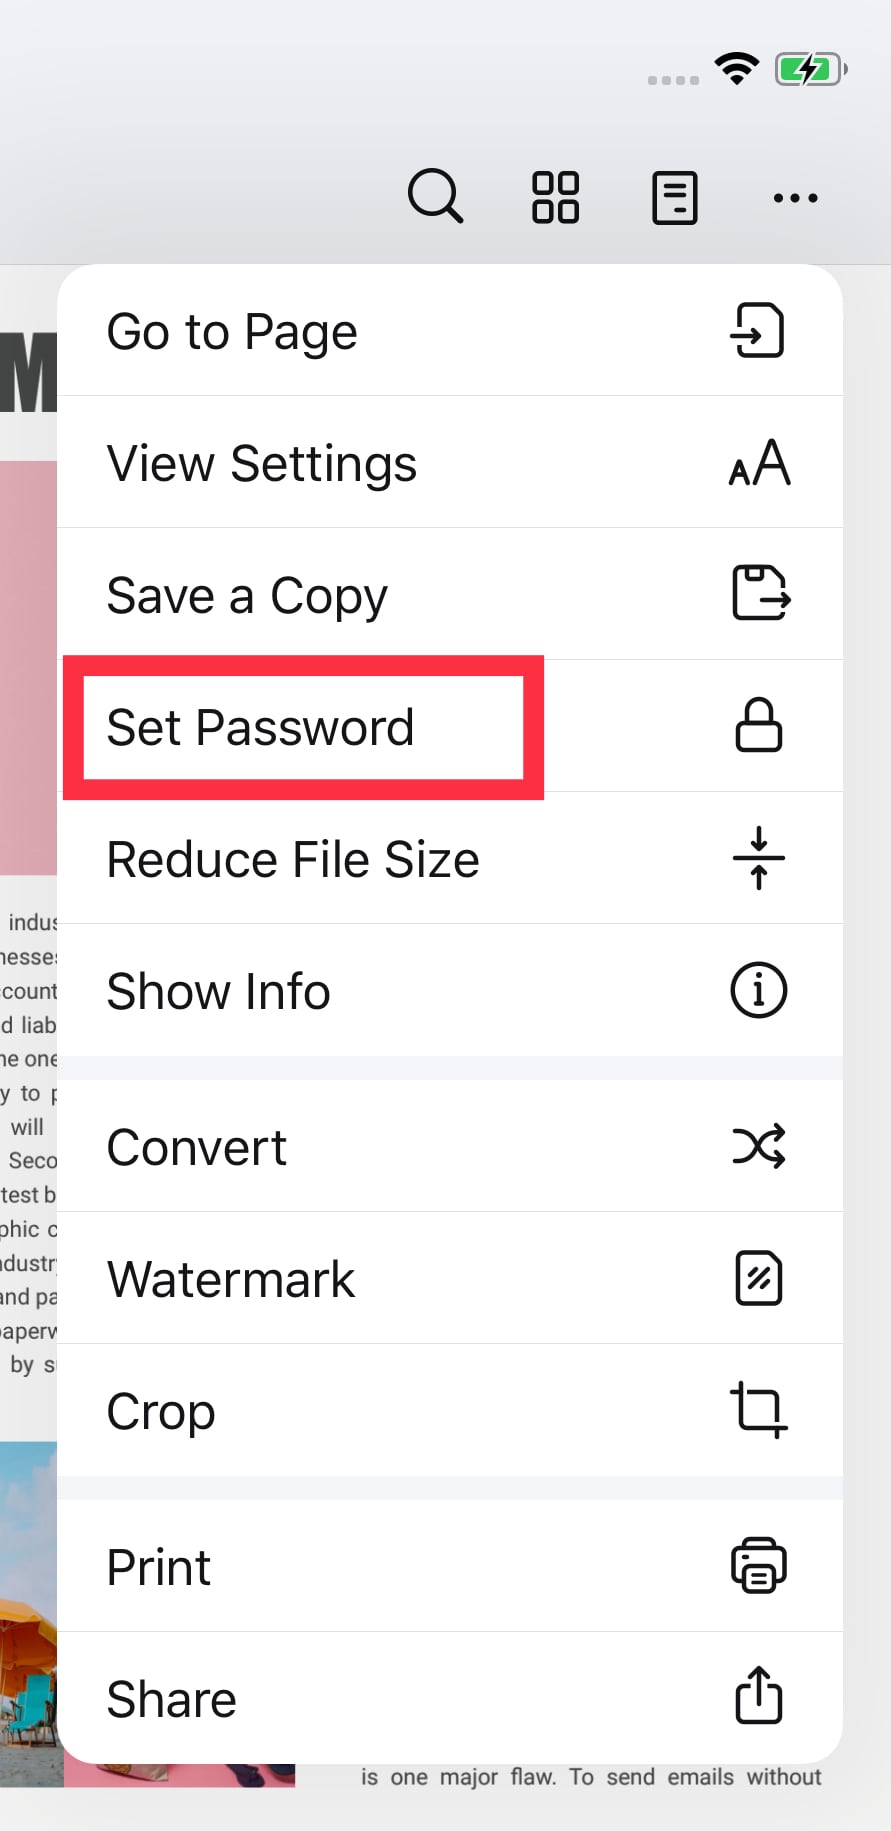 Passwort im PDF setzen